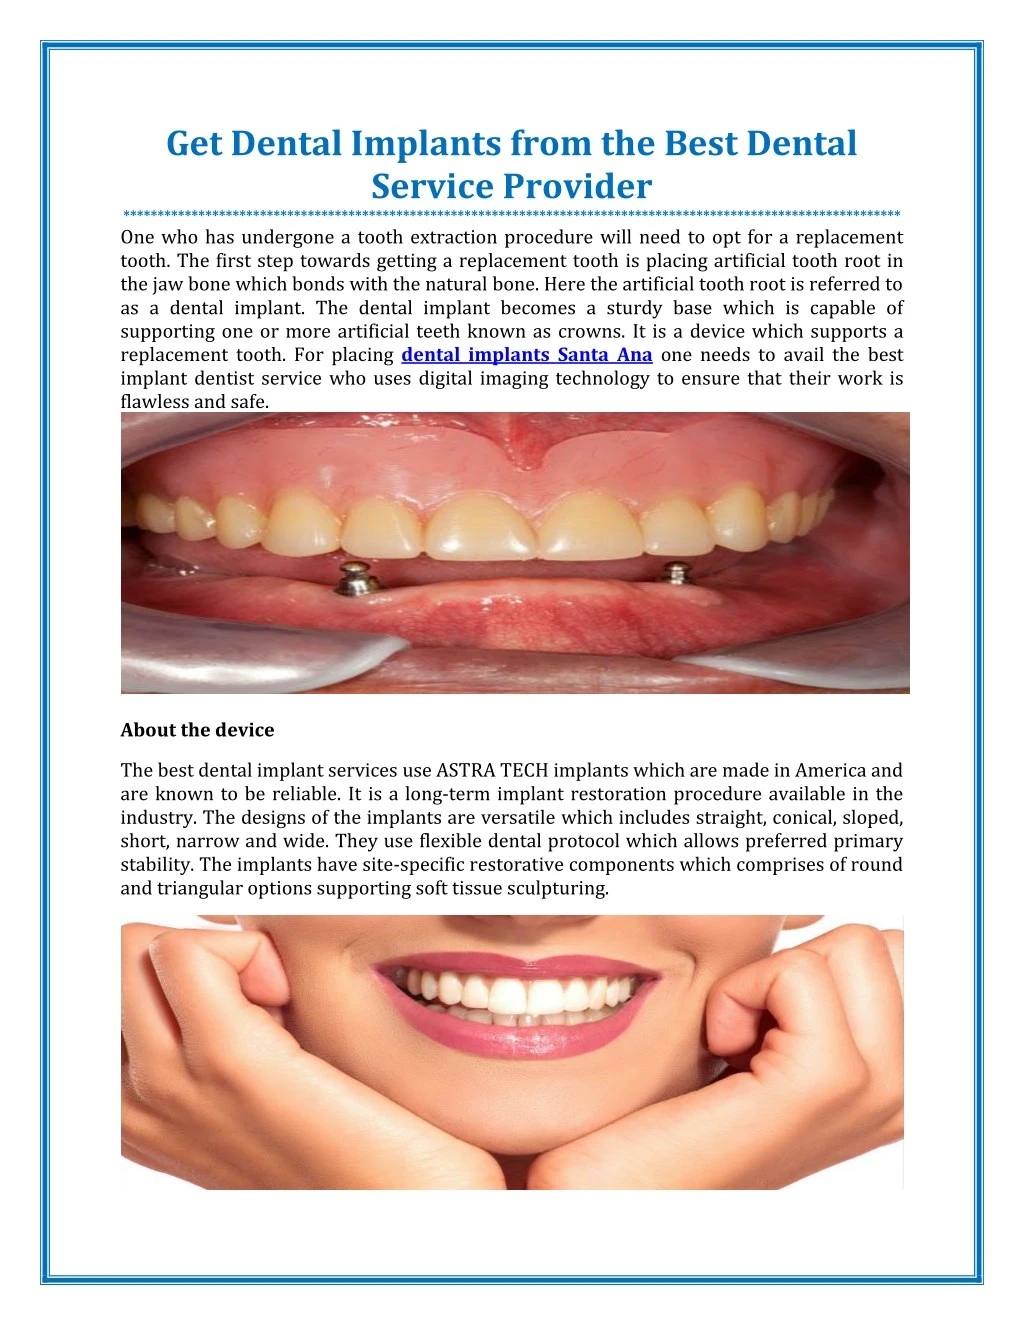 get dental implants from the best dental service